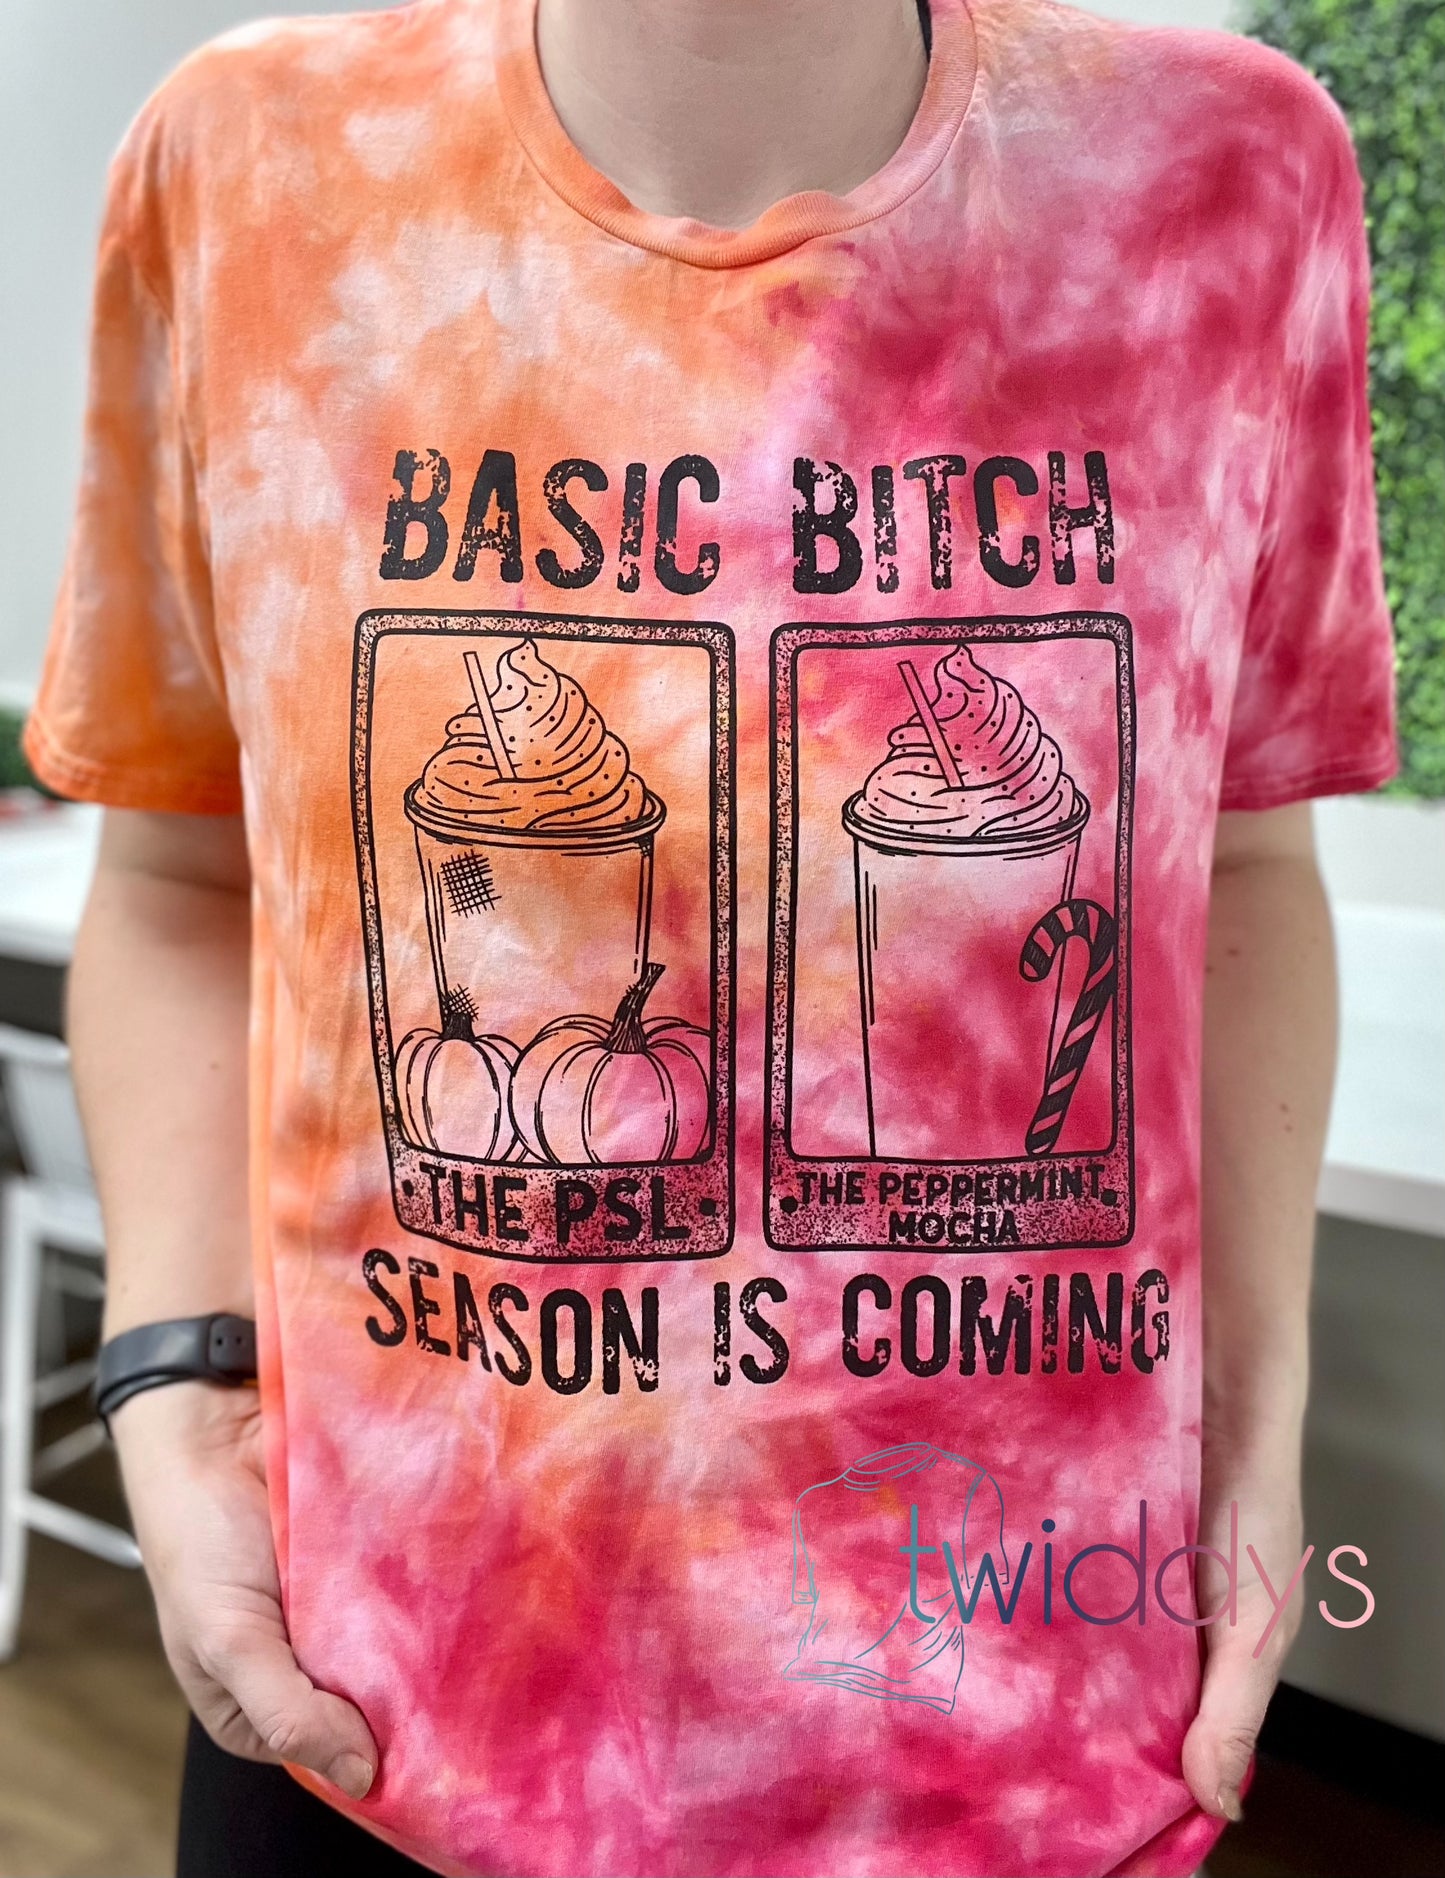 Basic Bitch Season Is Coming Dyed Tee